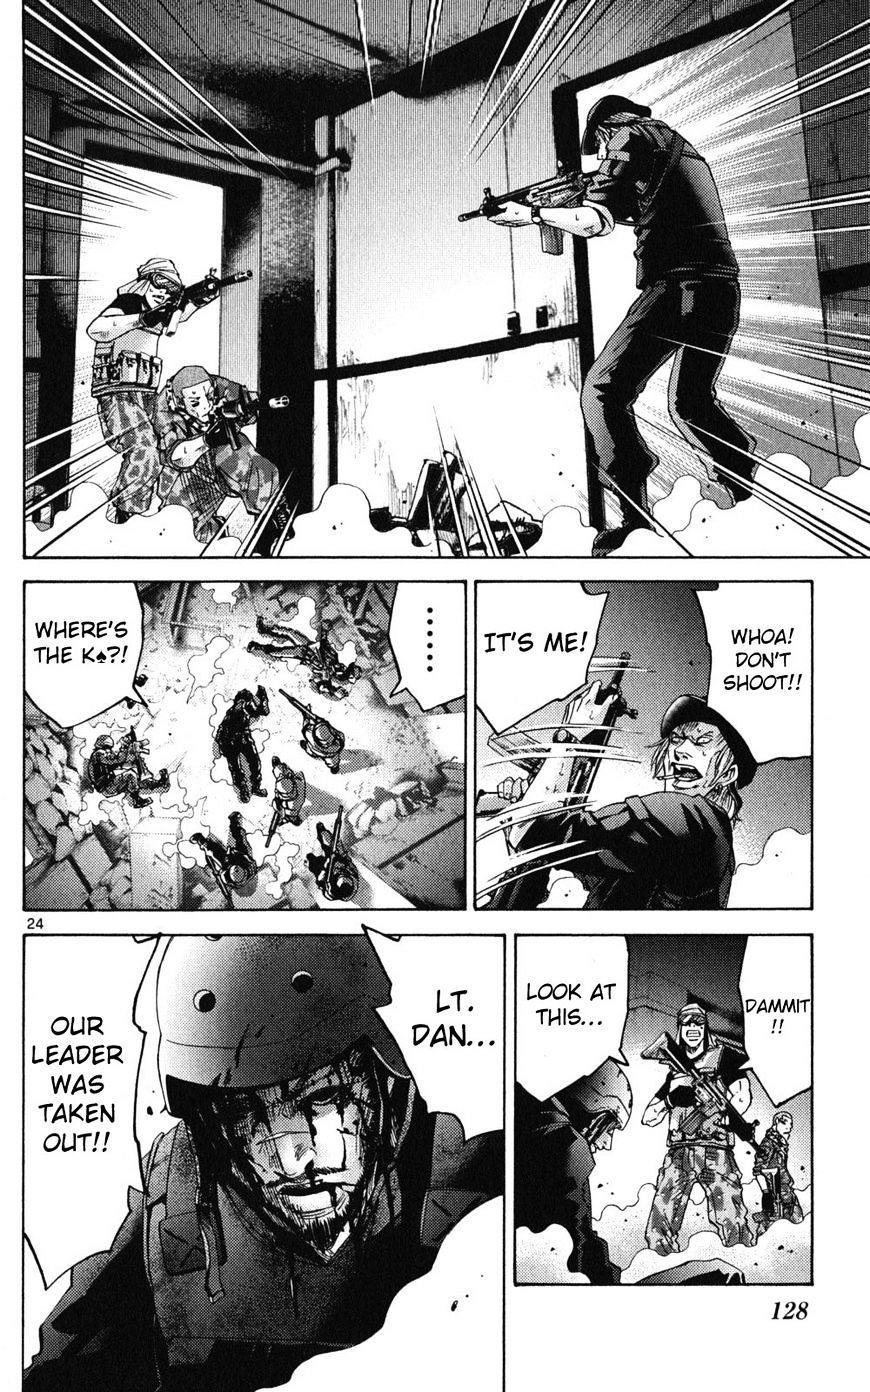 Imawa No Kuni No Alice Chapter 49.1 : Side Story 5 - King Of Spades (1) page 22 - Mangakakalot